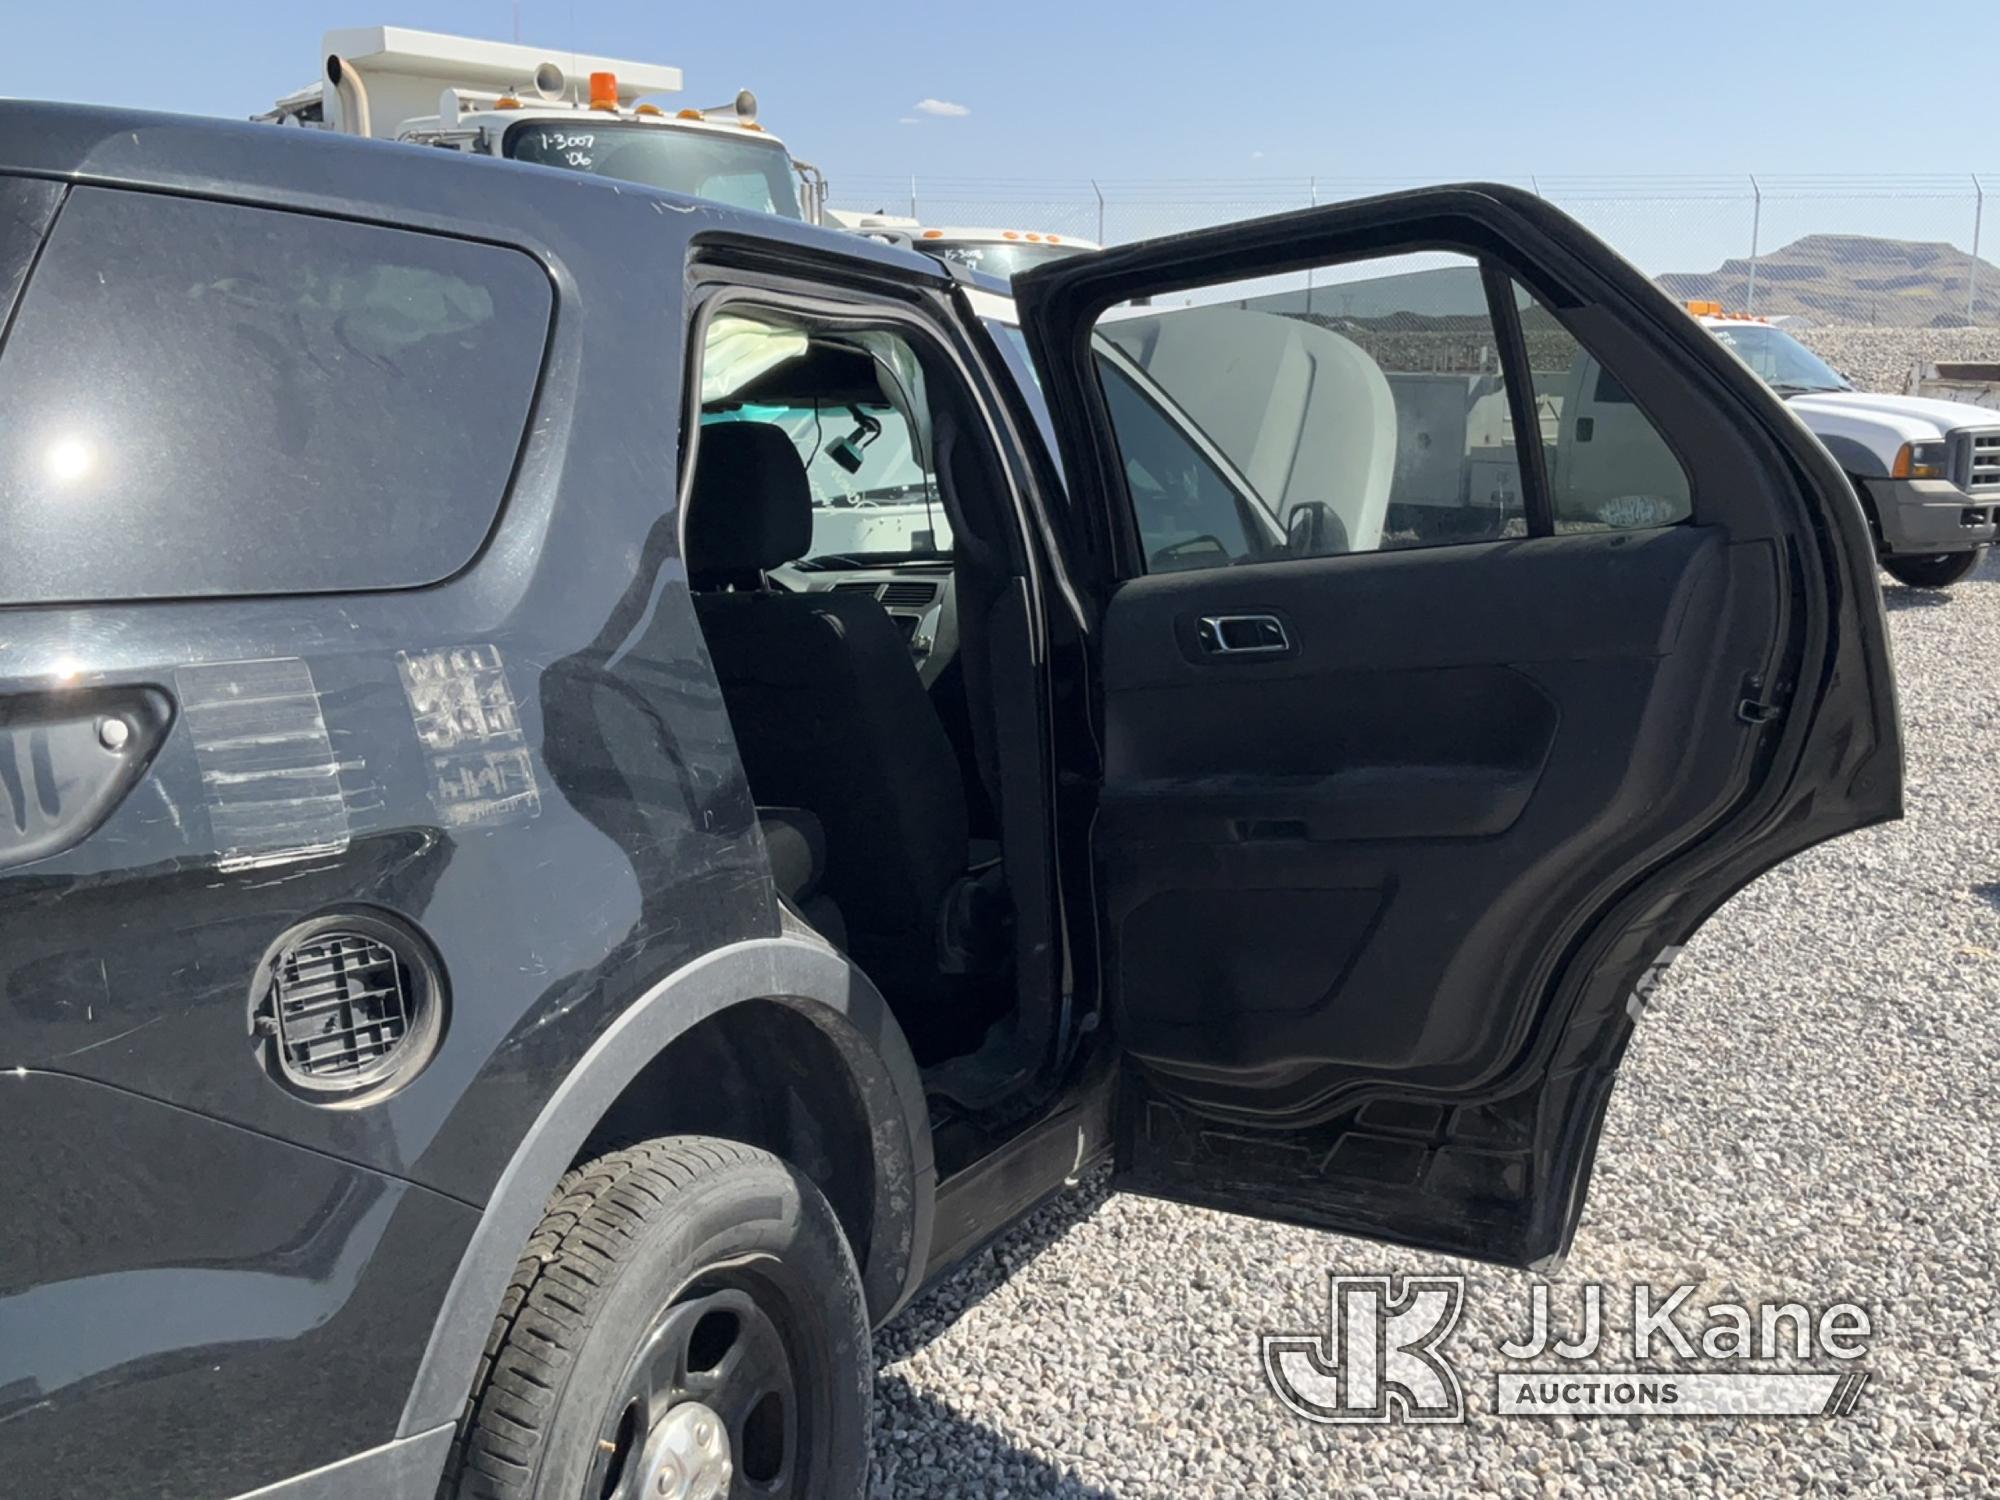 (Las Vegas, NV) 2015 Ford Explorer AWD Police Interceptor Dealers Only, Airbags Deployed, No Key